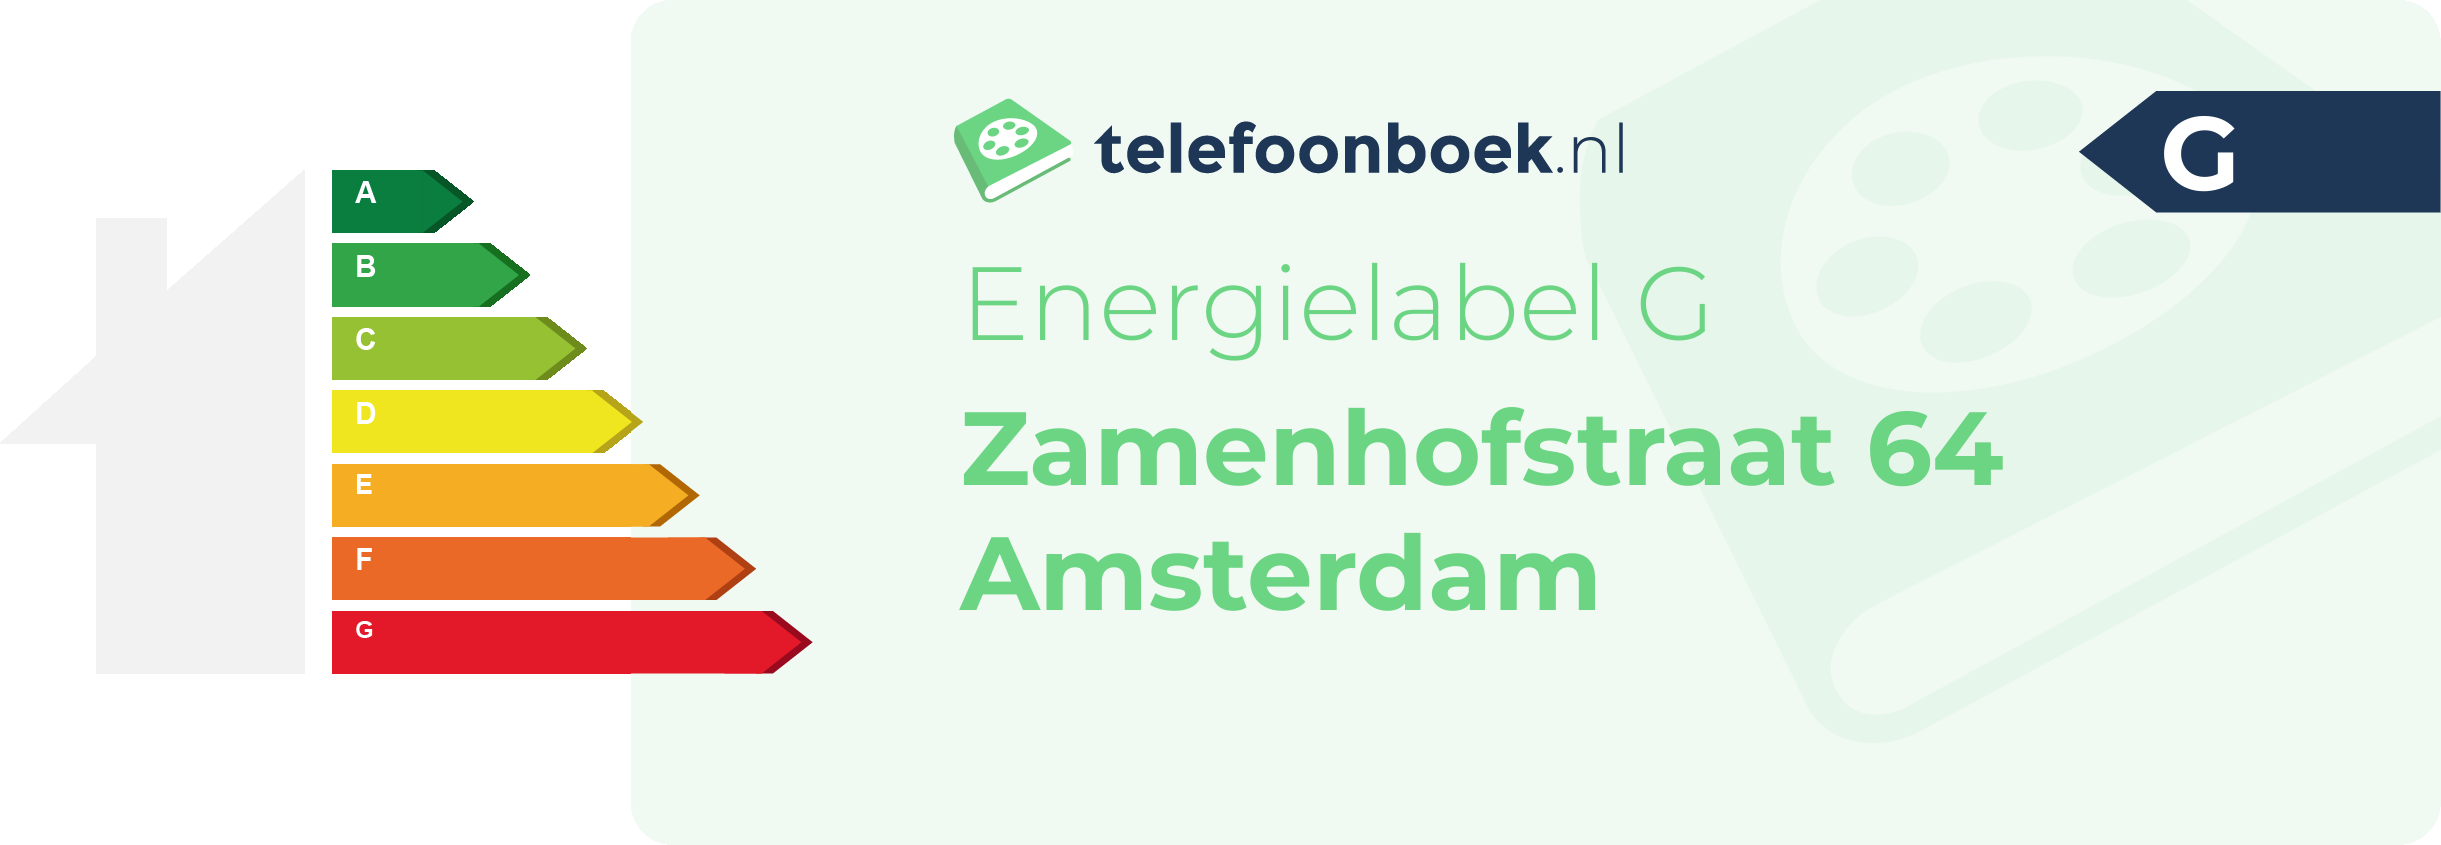 Energielabel Zamenhofstraat 64 Amsterdam